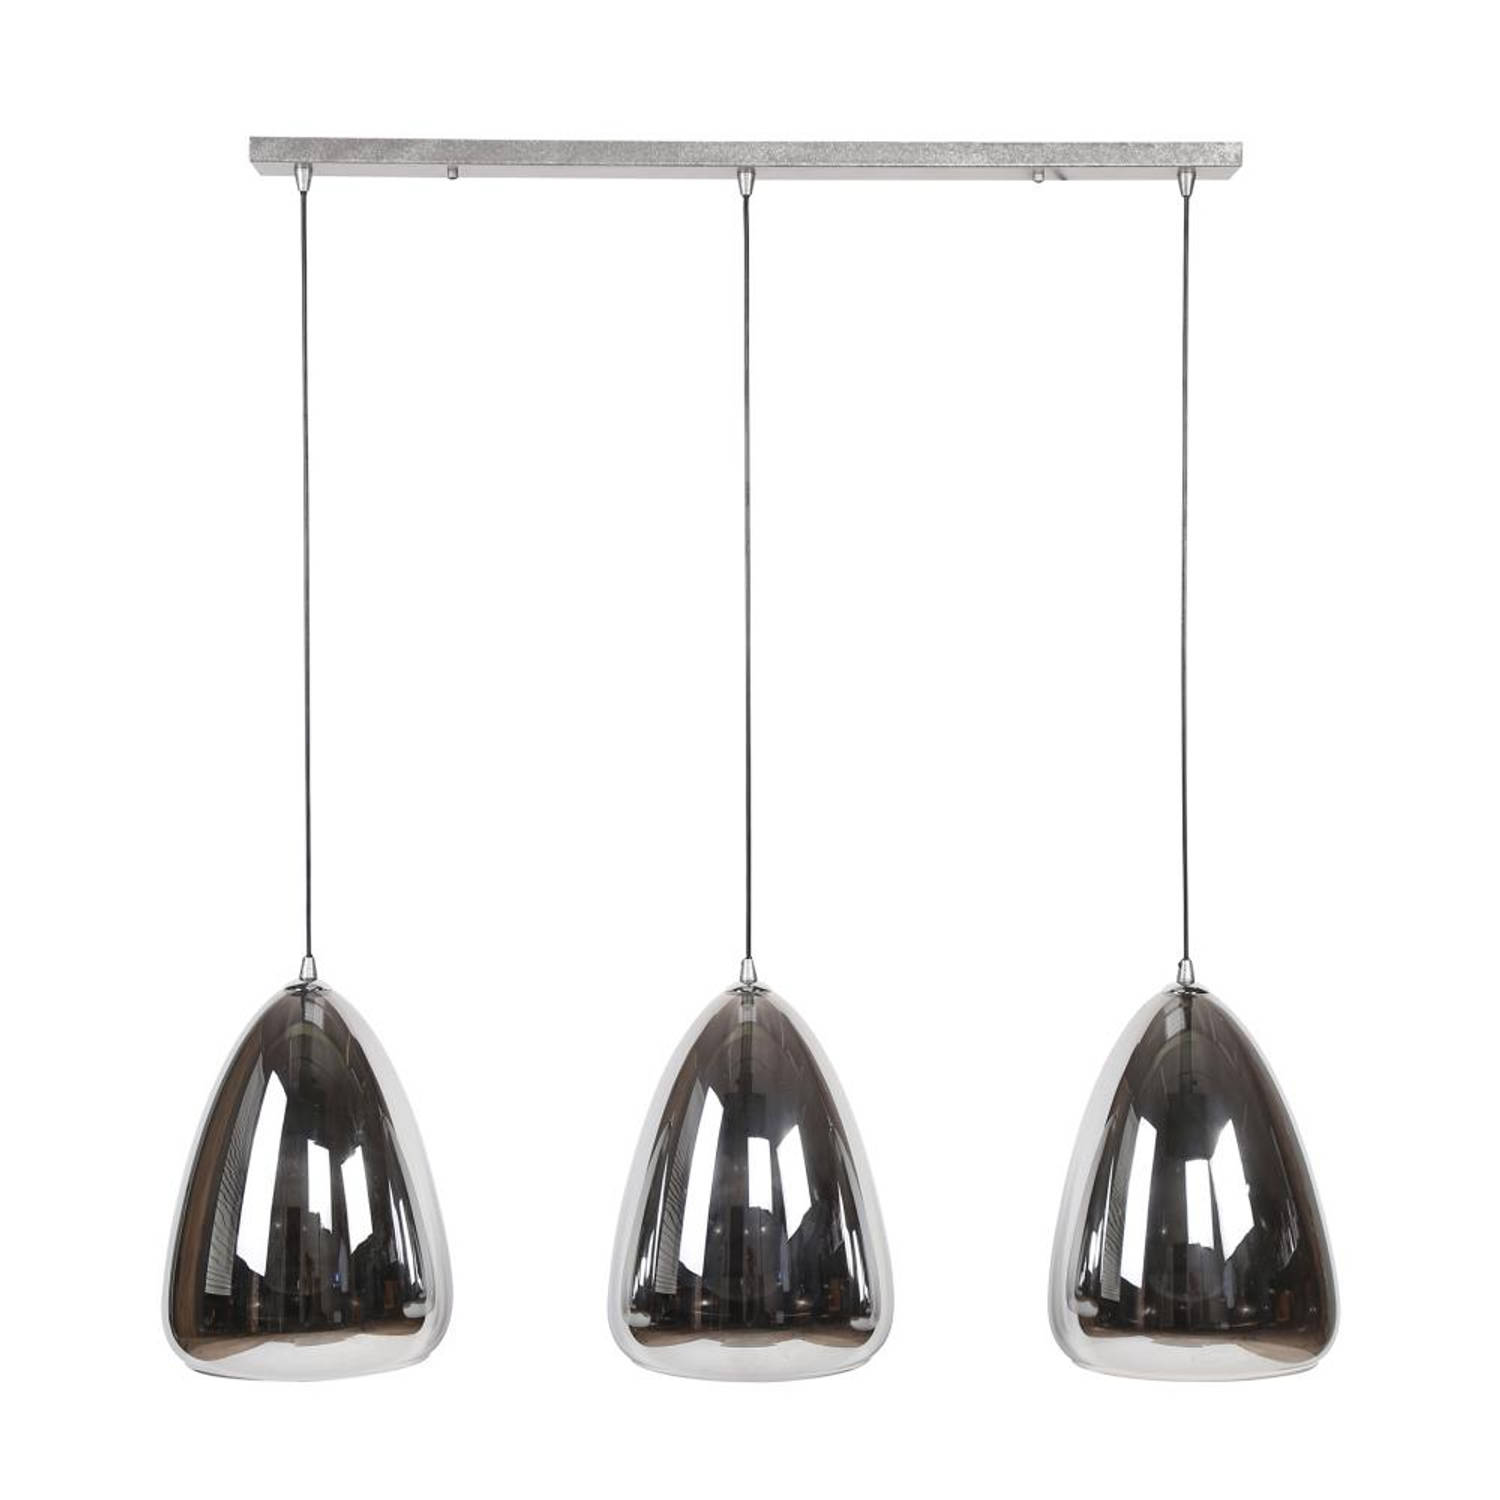 Giga Meubel Gm Hanglamp 3-lichts - Chrome - Glas - Lamp Zilver Pearl